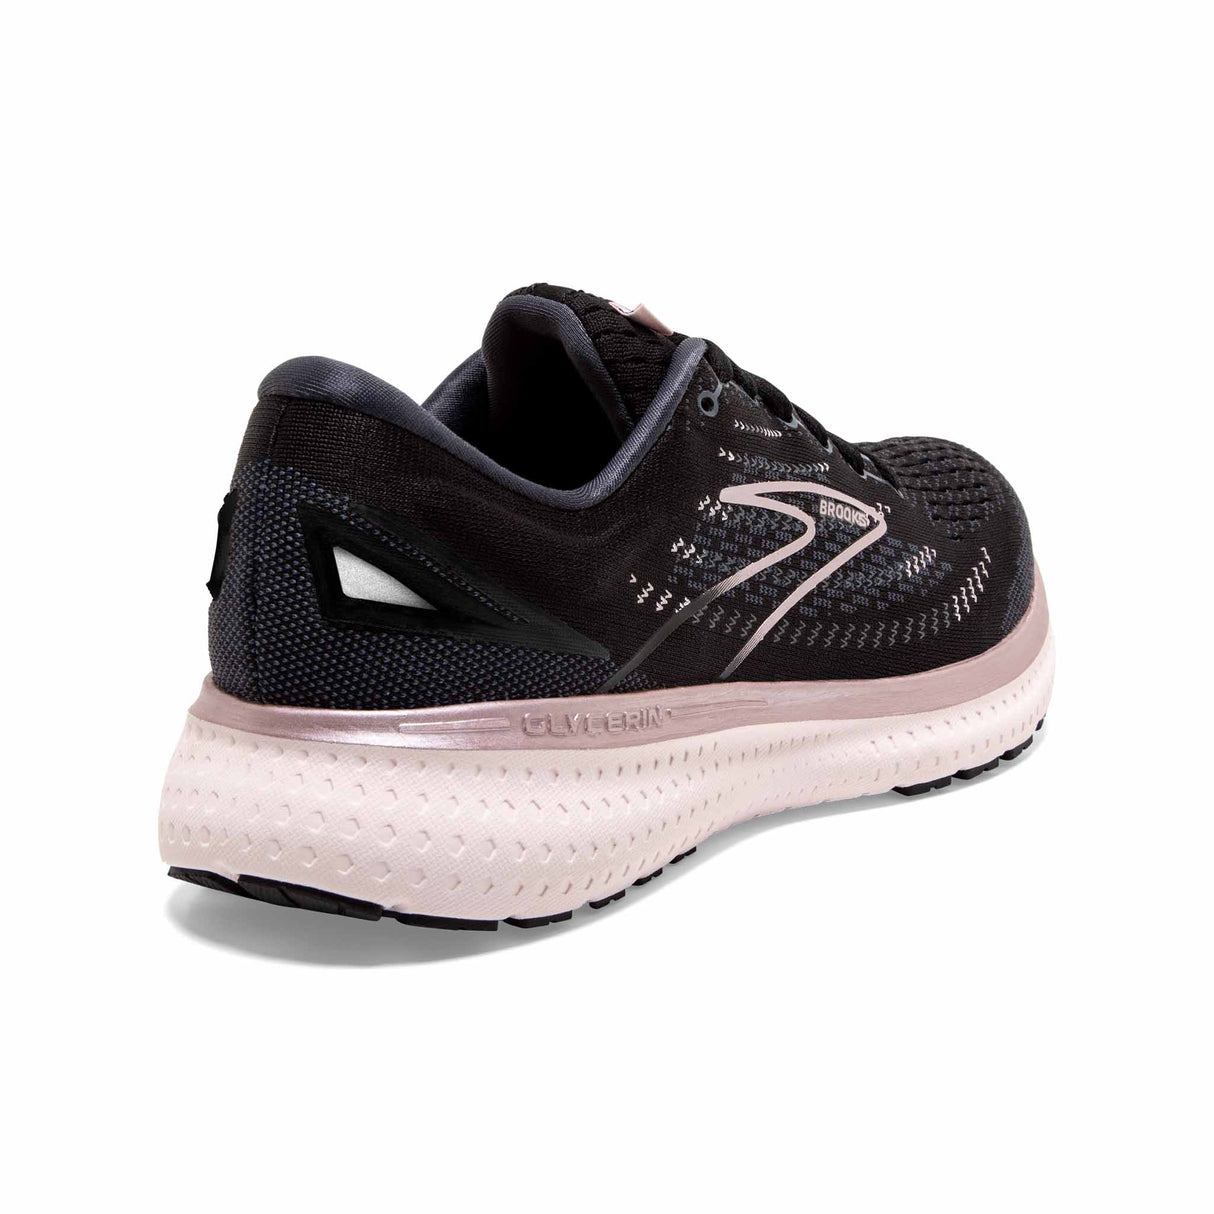 Brooks Glycerin 19 chaussures de course à pied femme - Black / Ombre / Metallic - angle 2